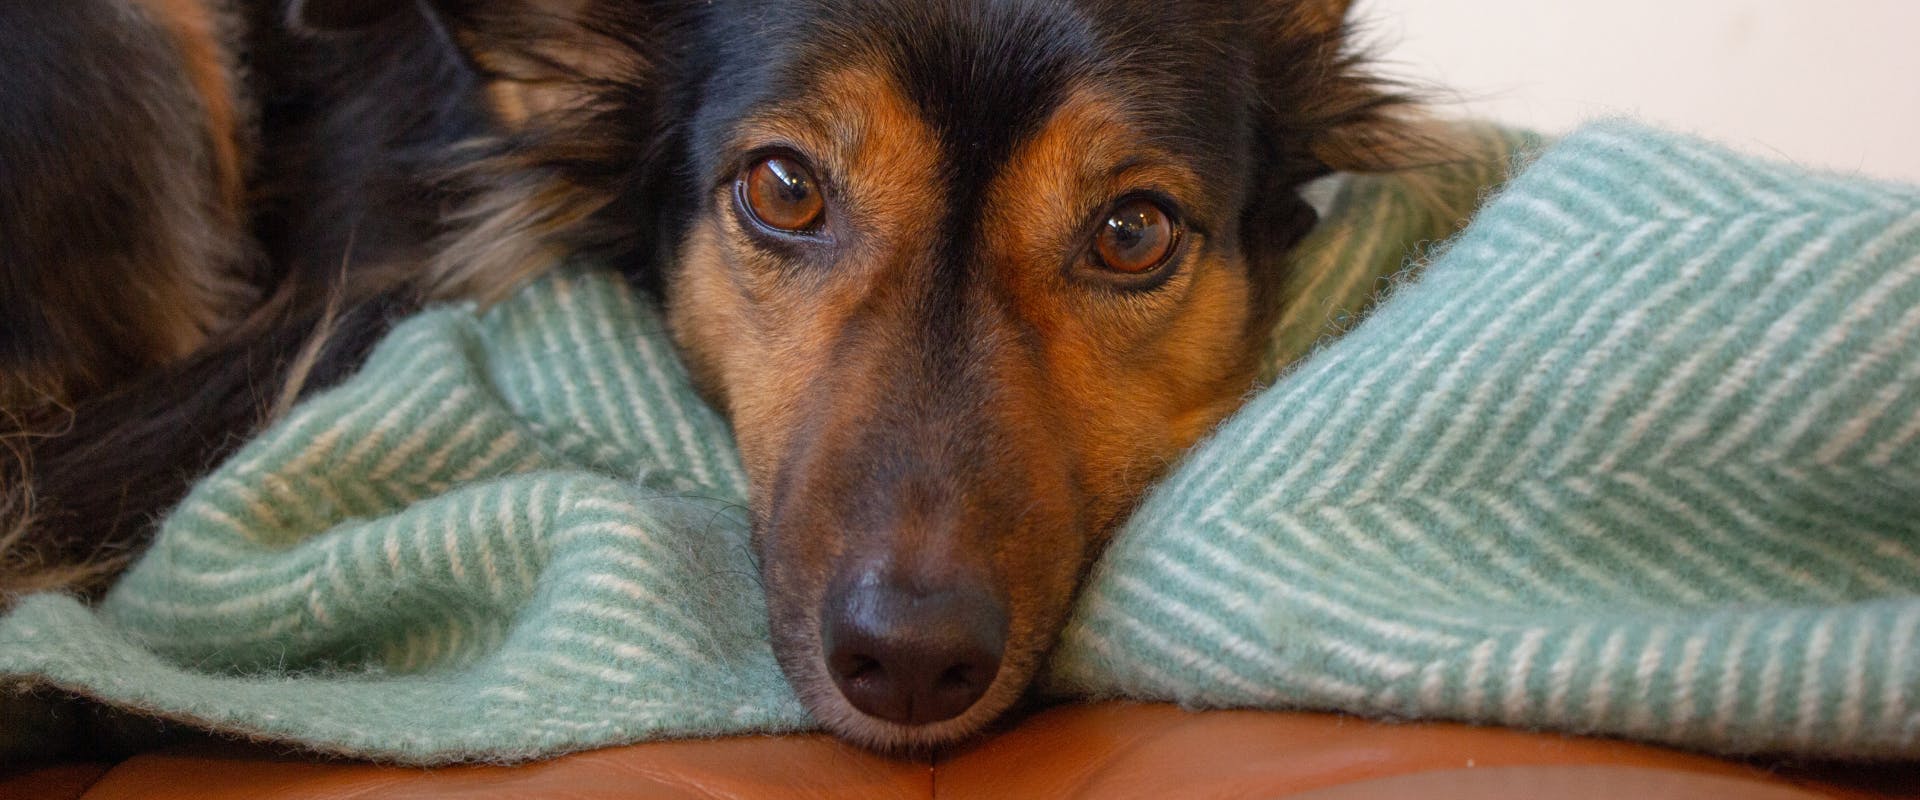 A dog rests on a blanket.